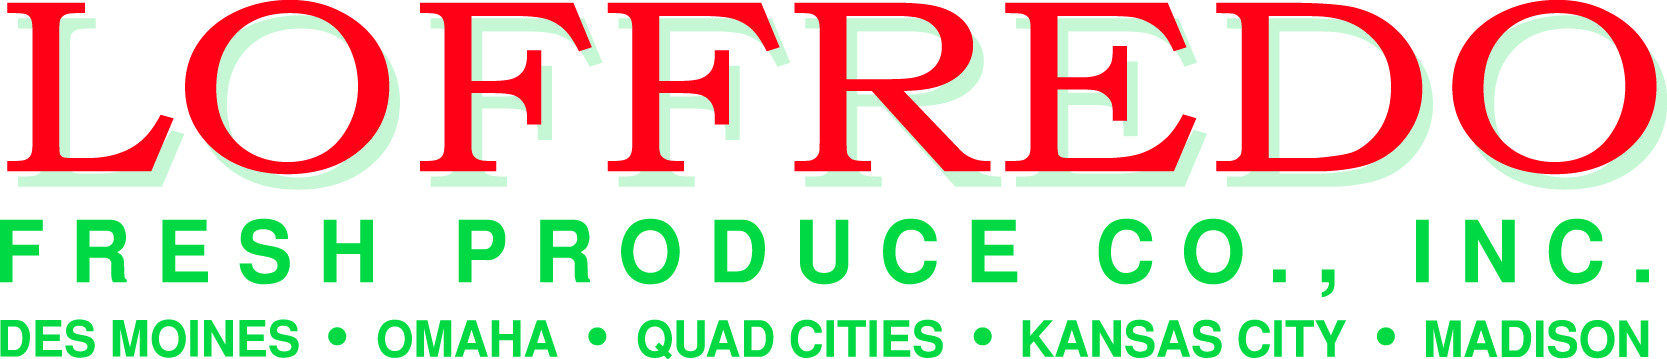 Loffredo Fresh Produce Co., Inc.